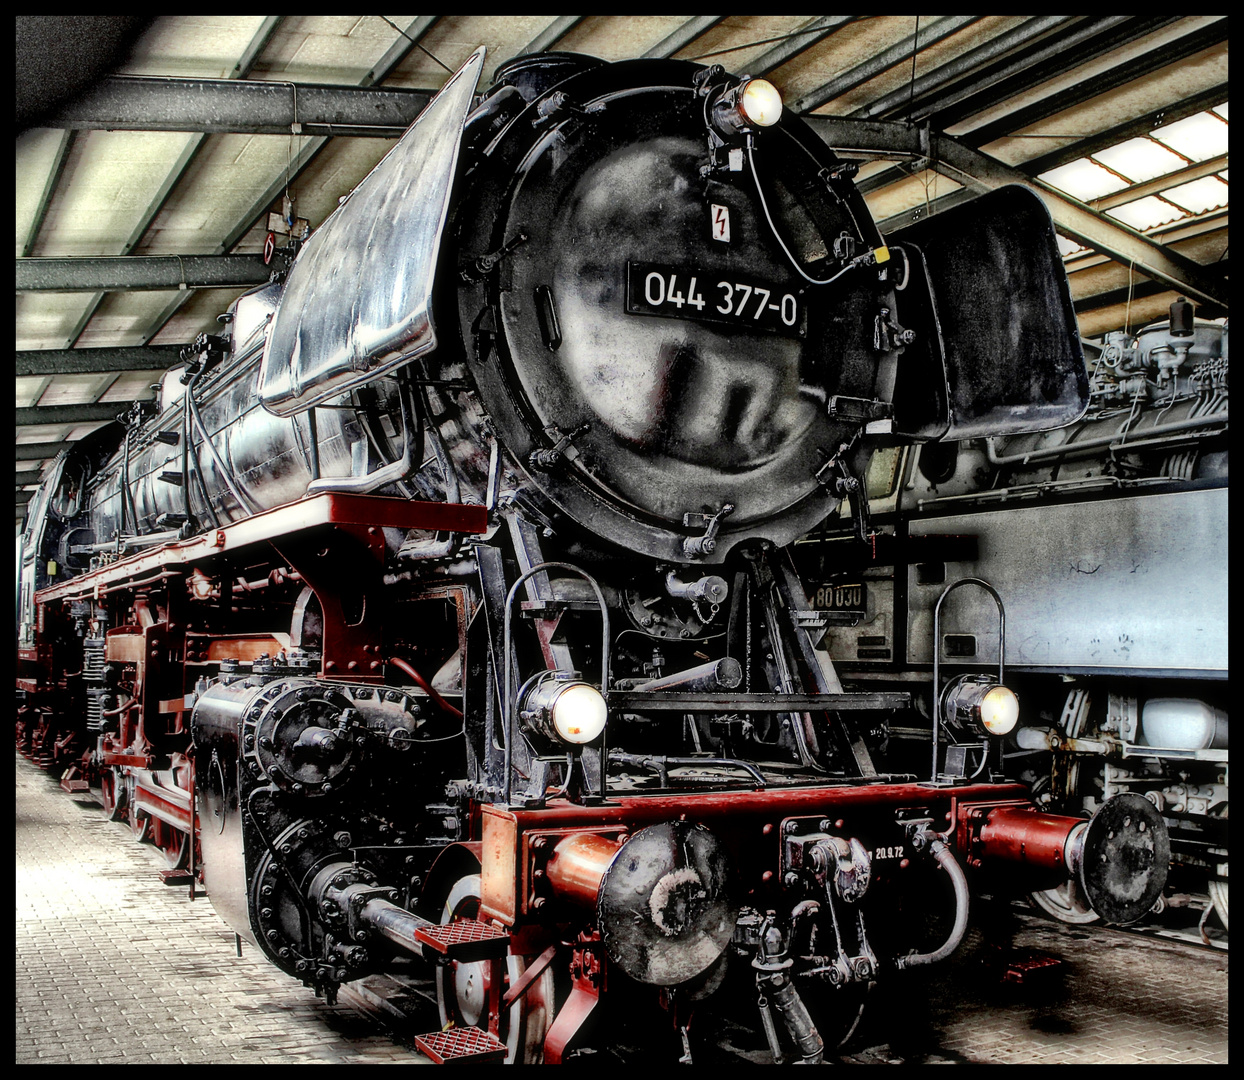 Nostalgie Dampflock / Locomotive à vapeur nostalgie